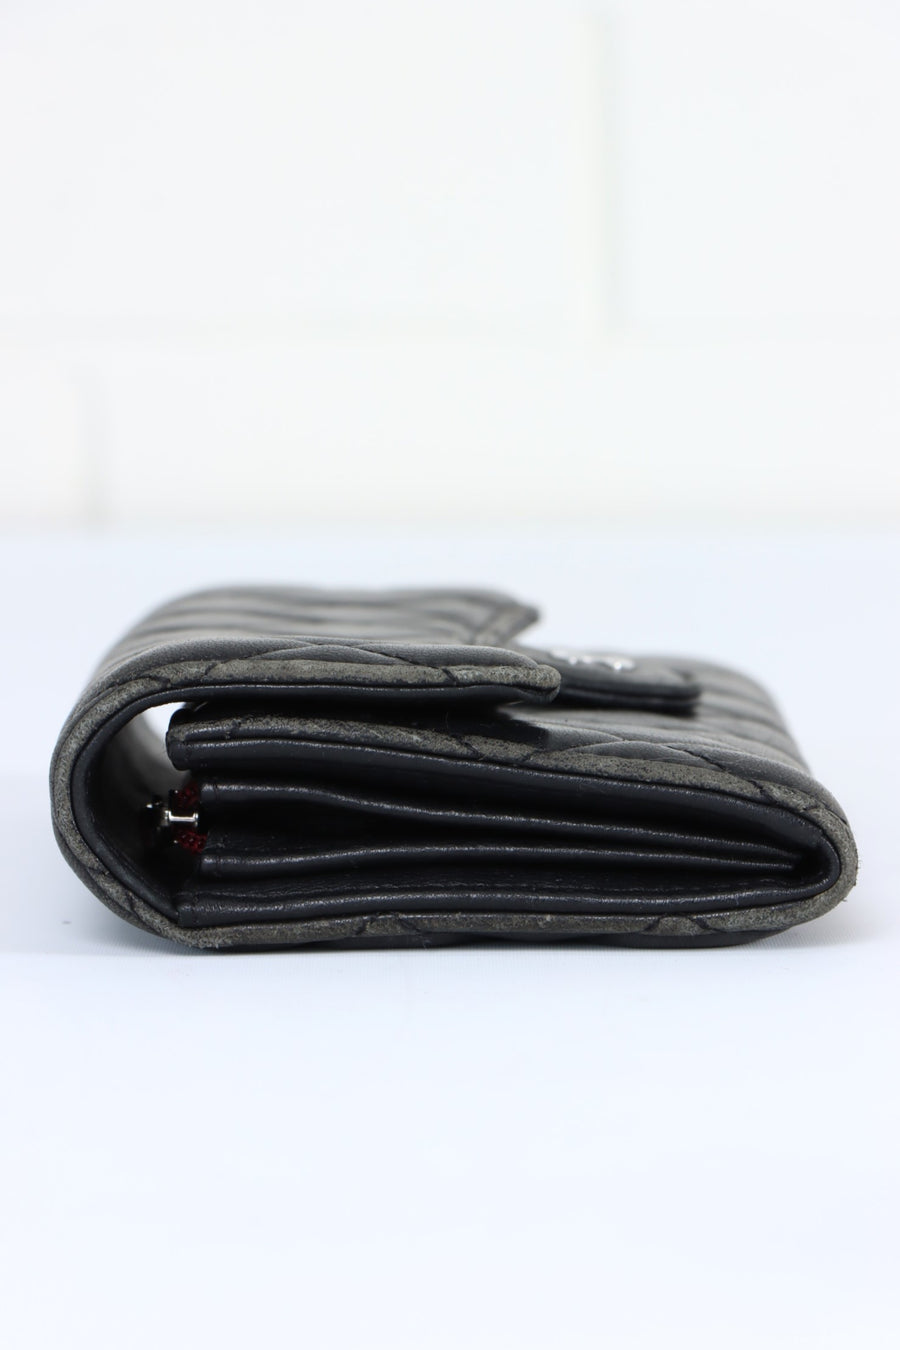 REPLICA Chanel Classic Flap Long Wallet